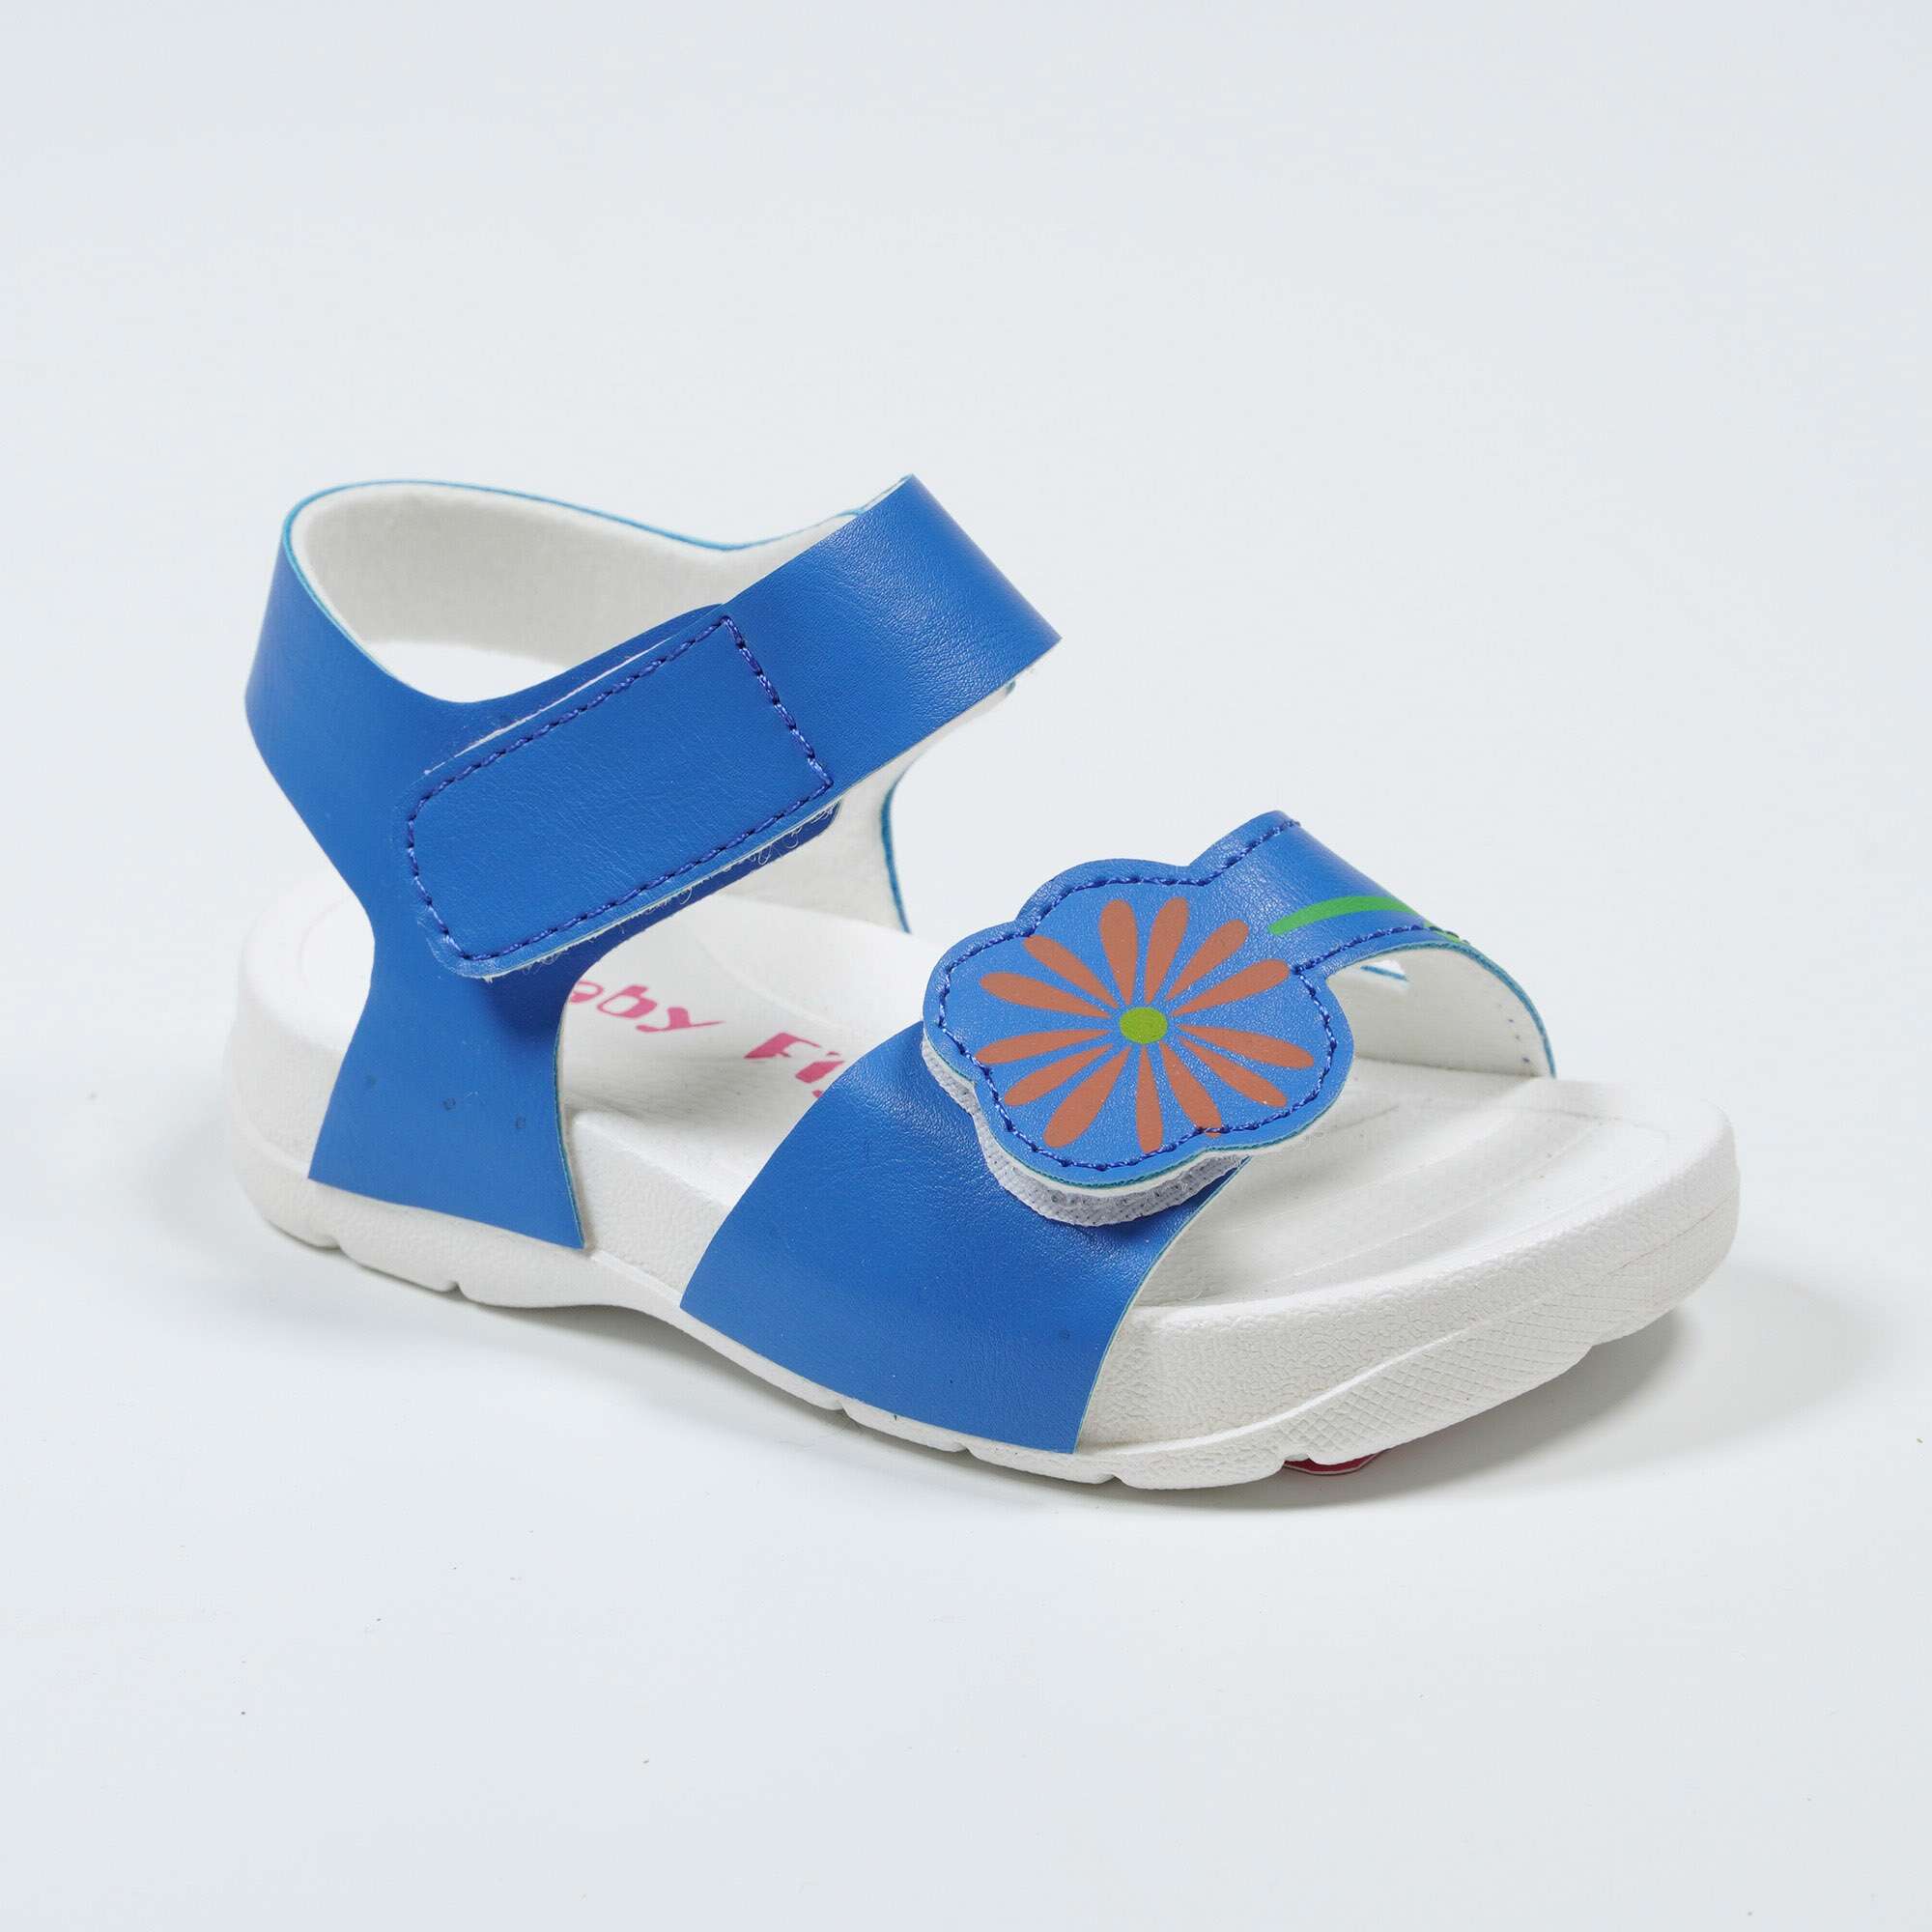 Nikoofly-Wholesale-Flower-Print-Sandals-for-Children-YDX2311C-4-blue